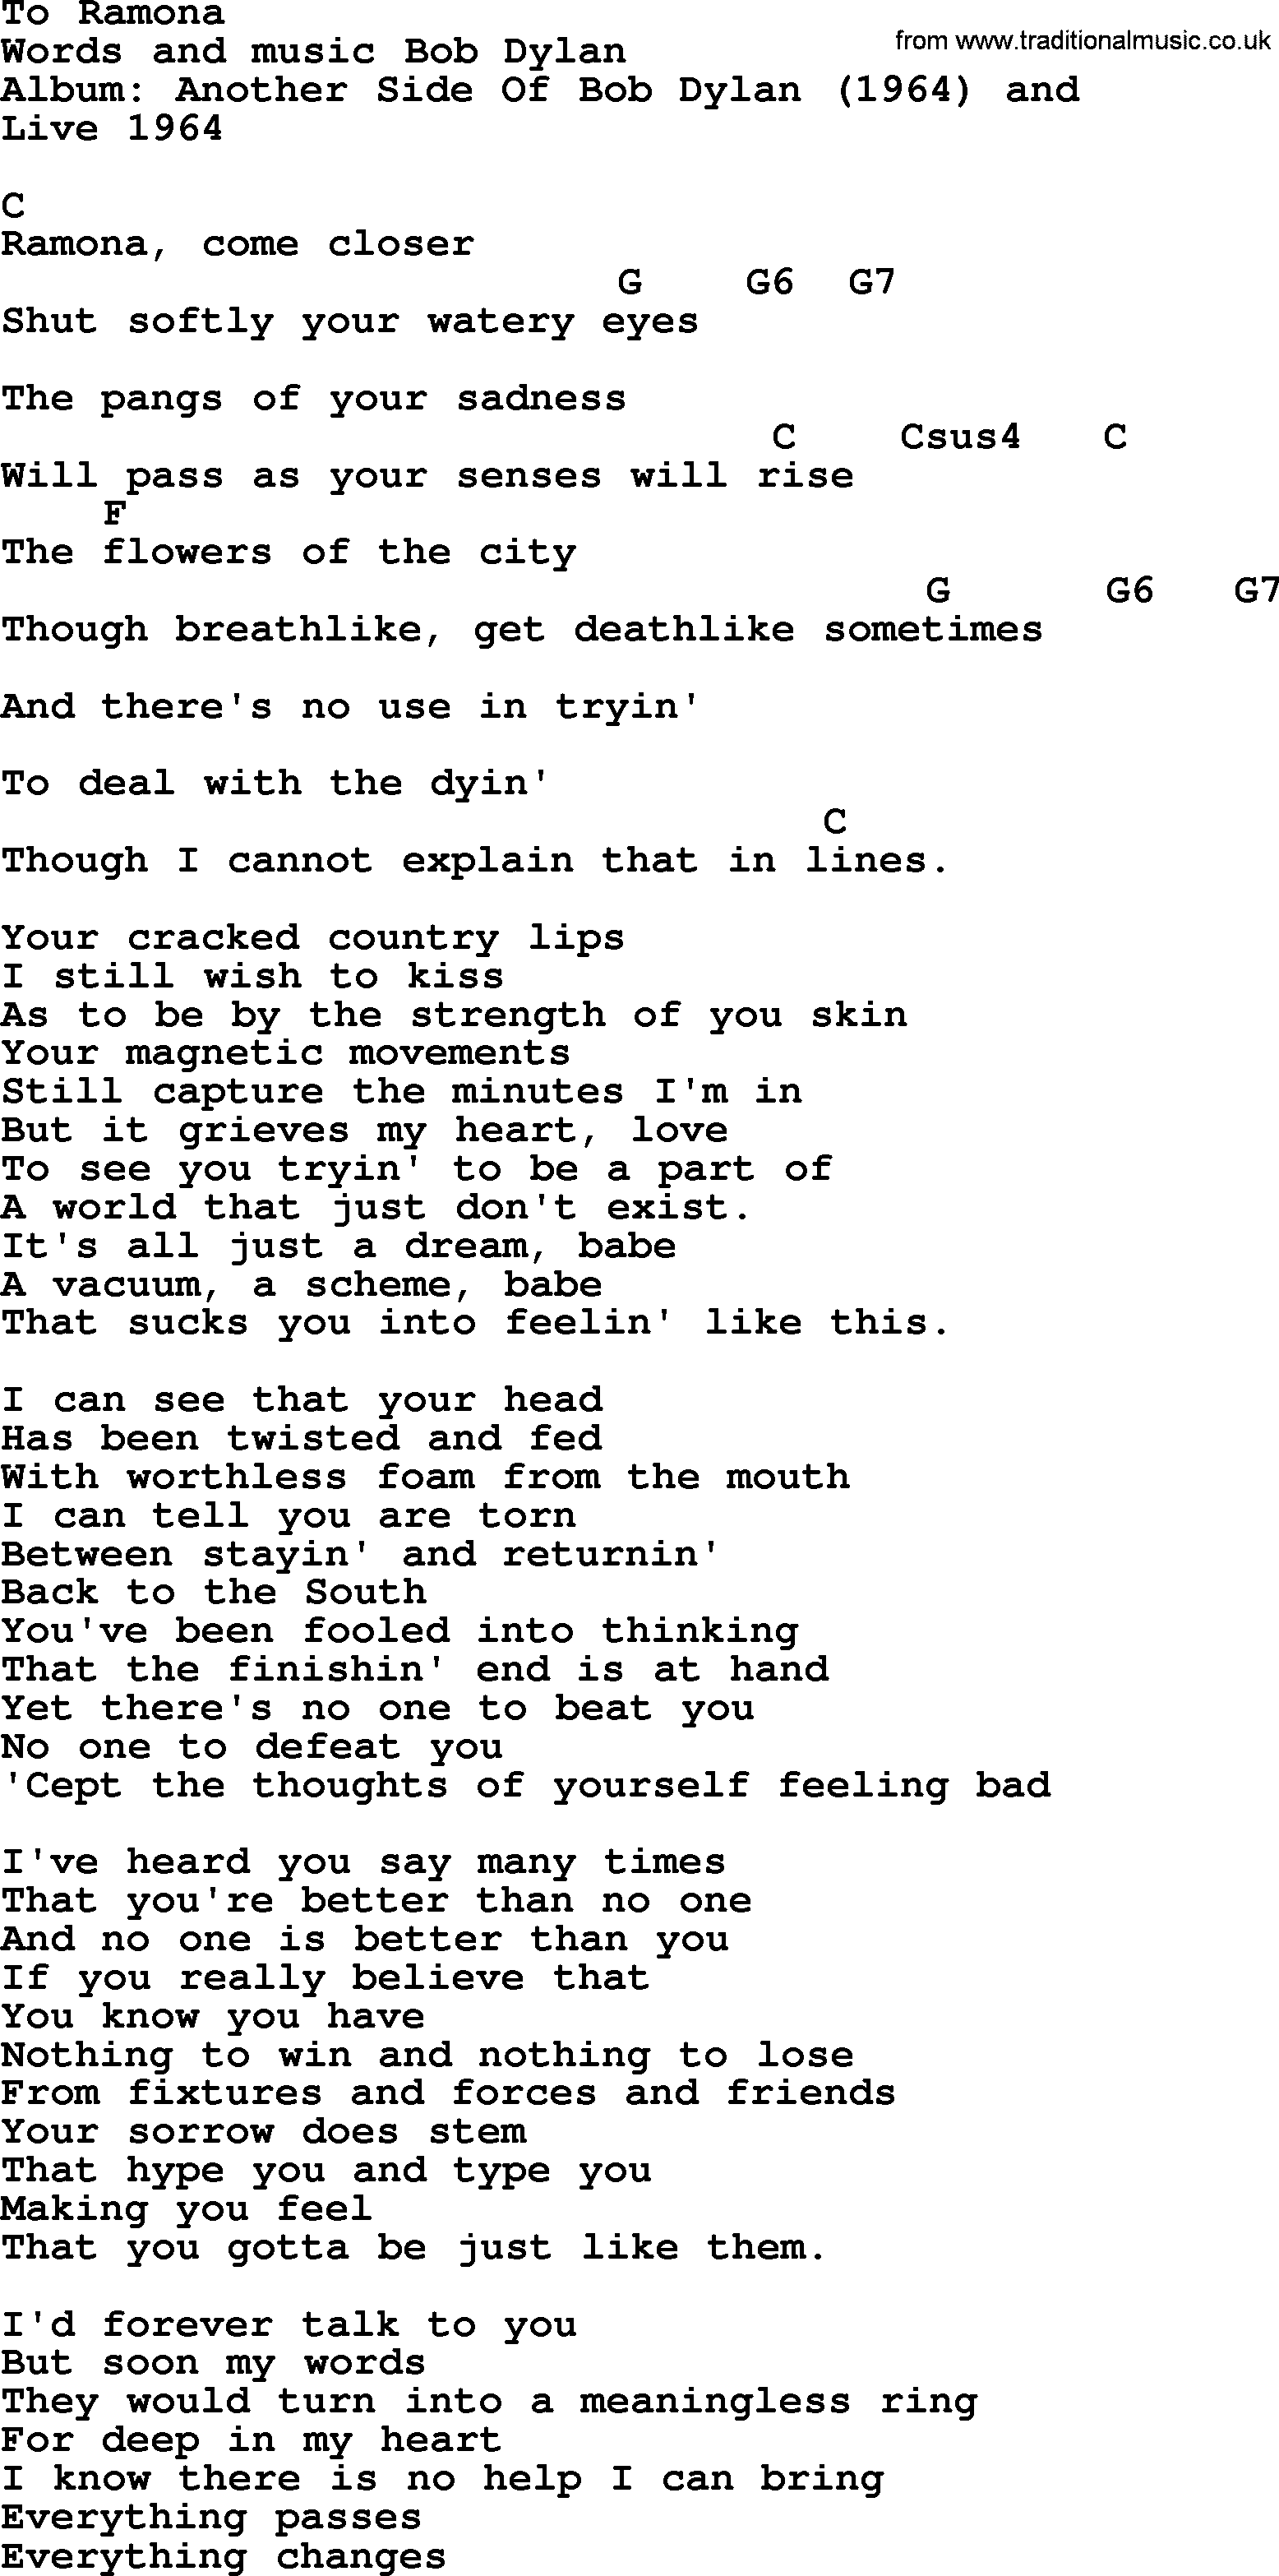 Bob Dylan song, lyrics with chords - To Ramona